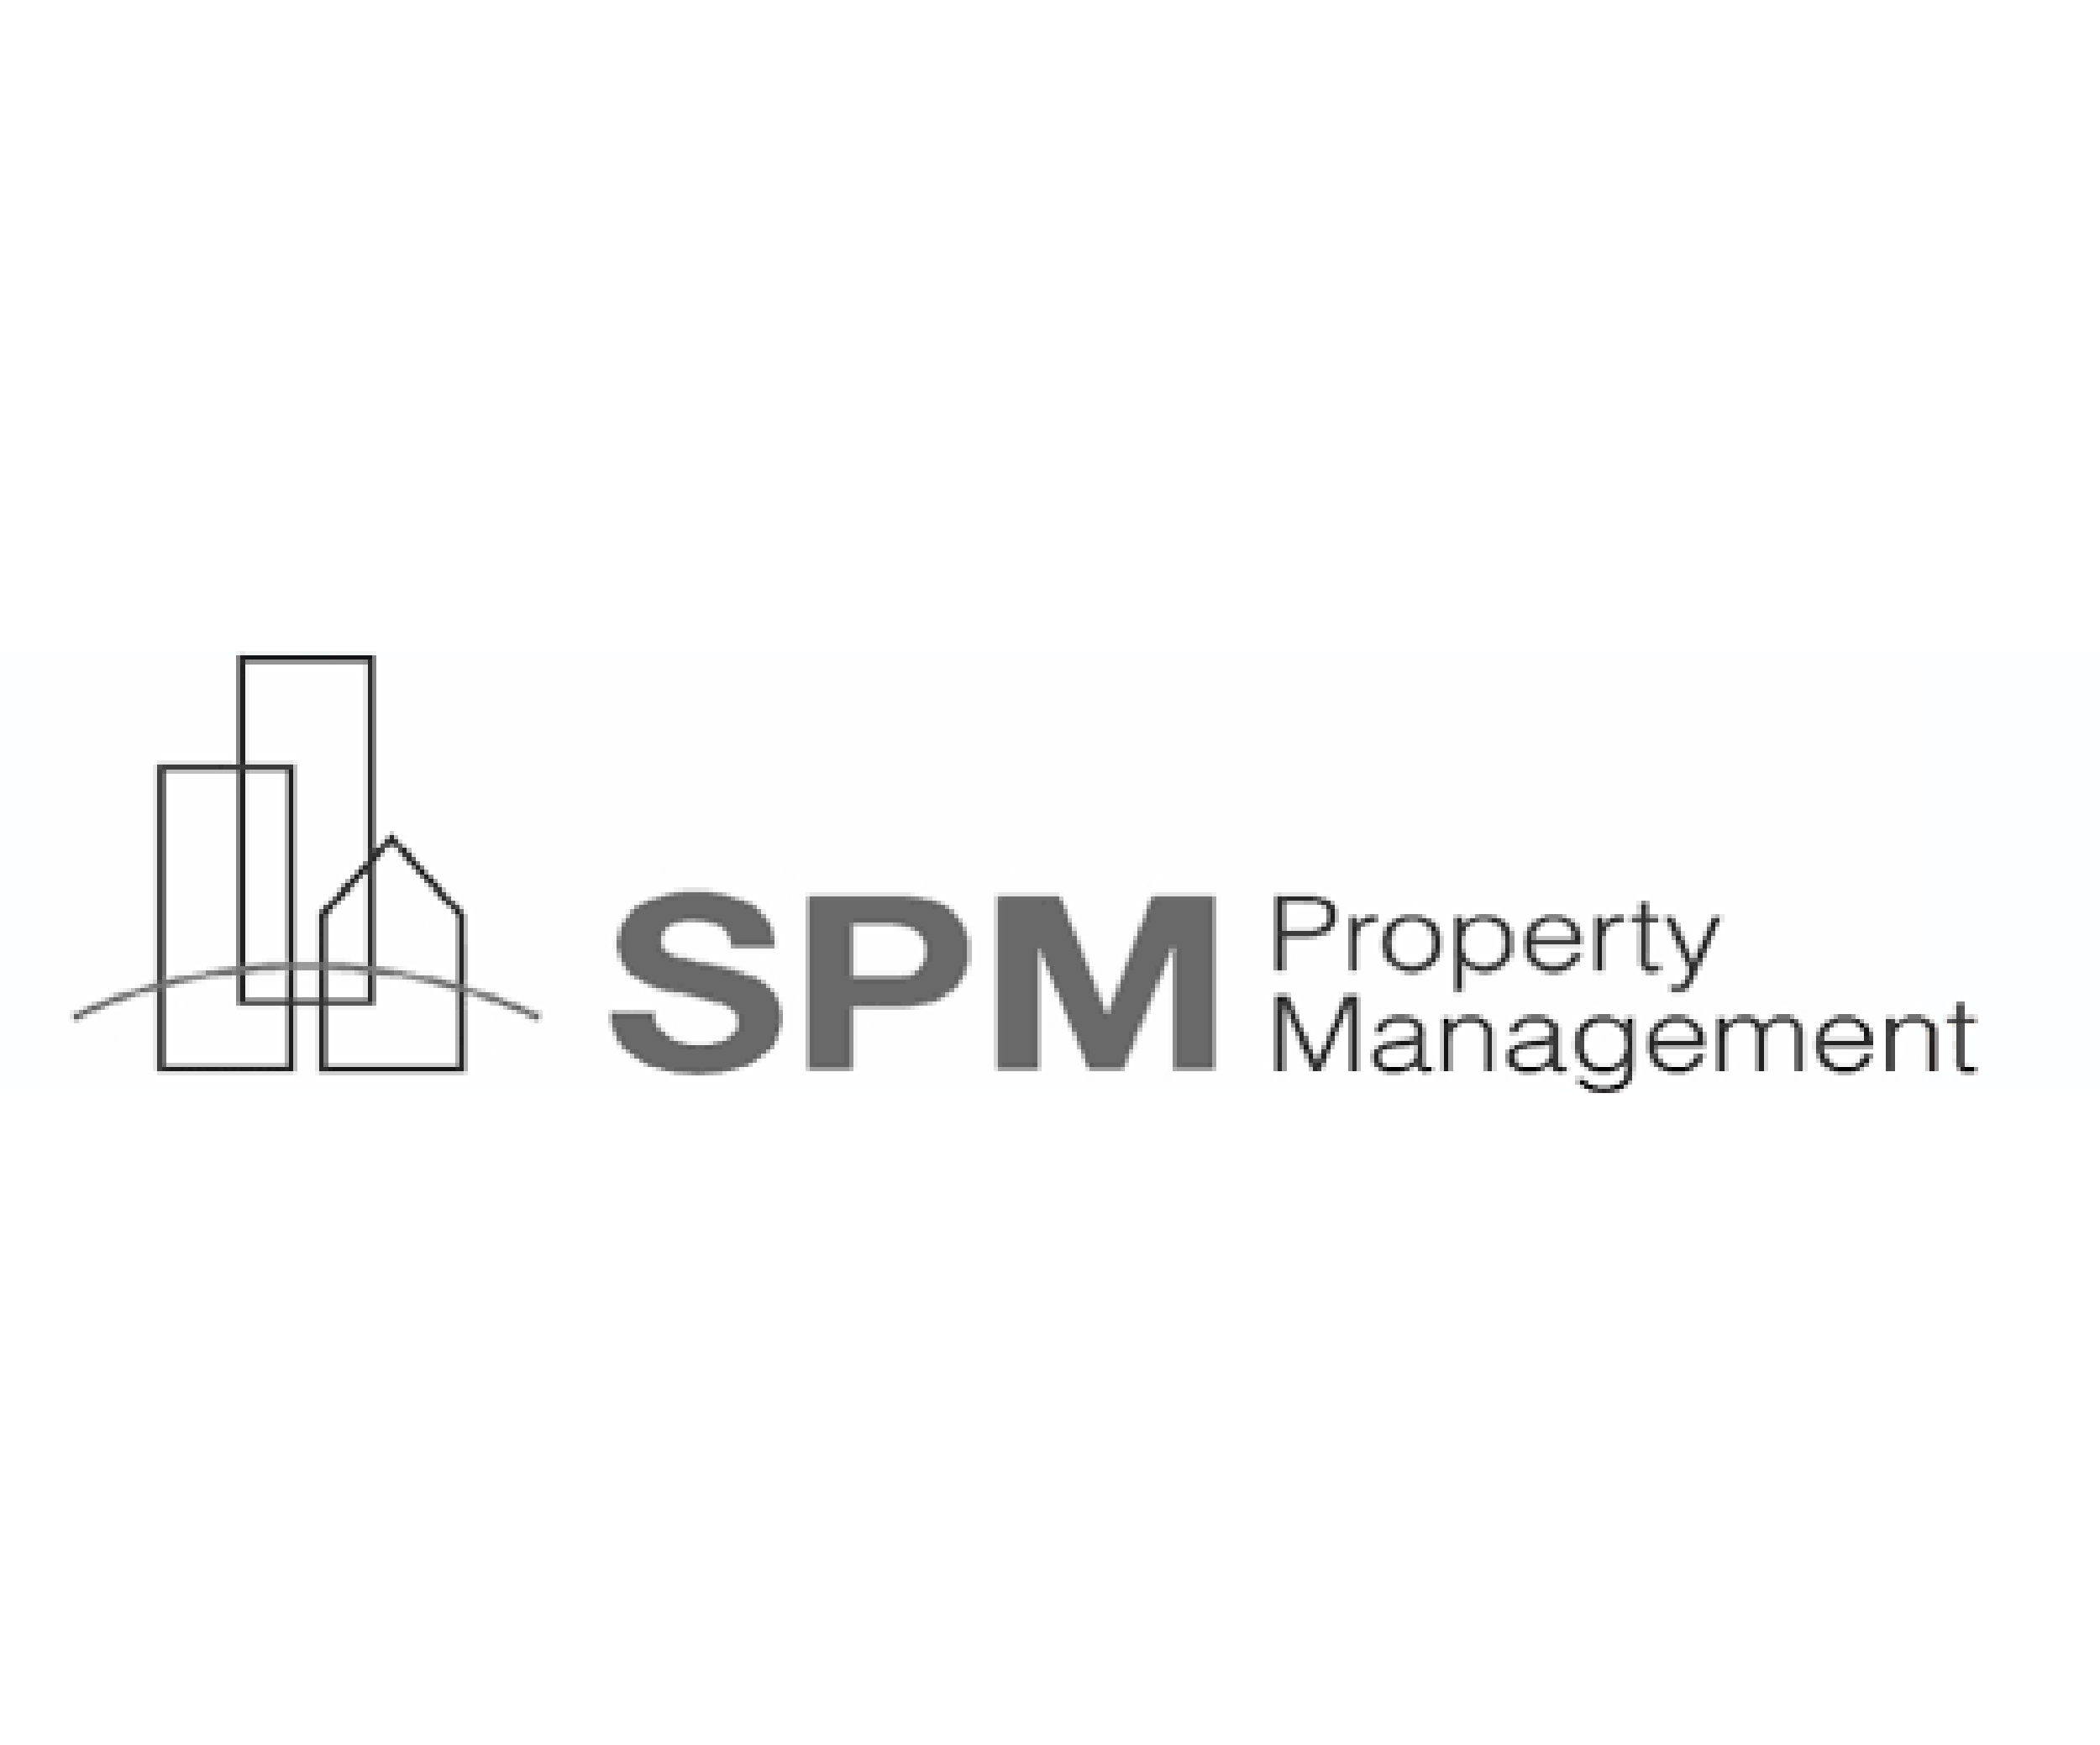 spm-property-management.png